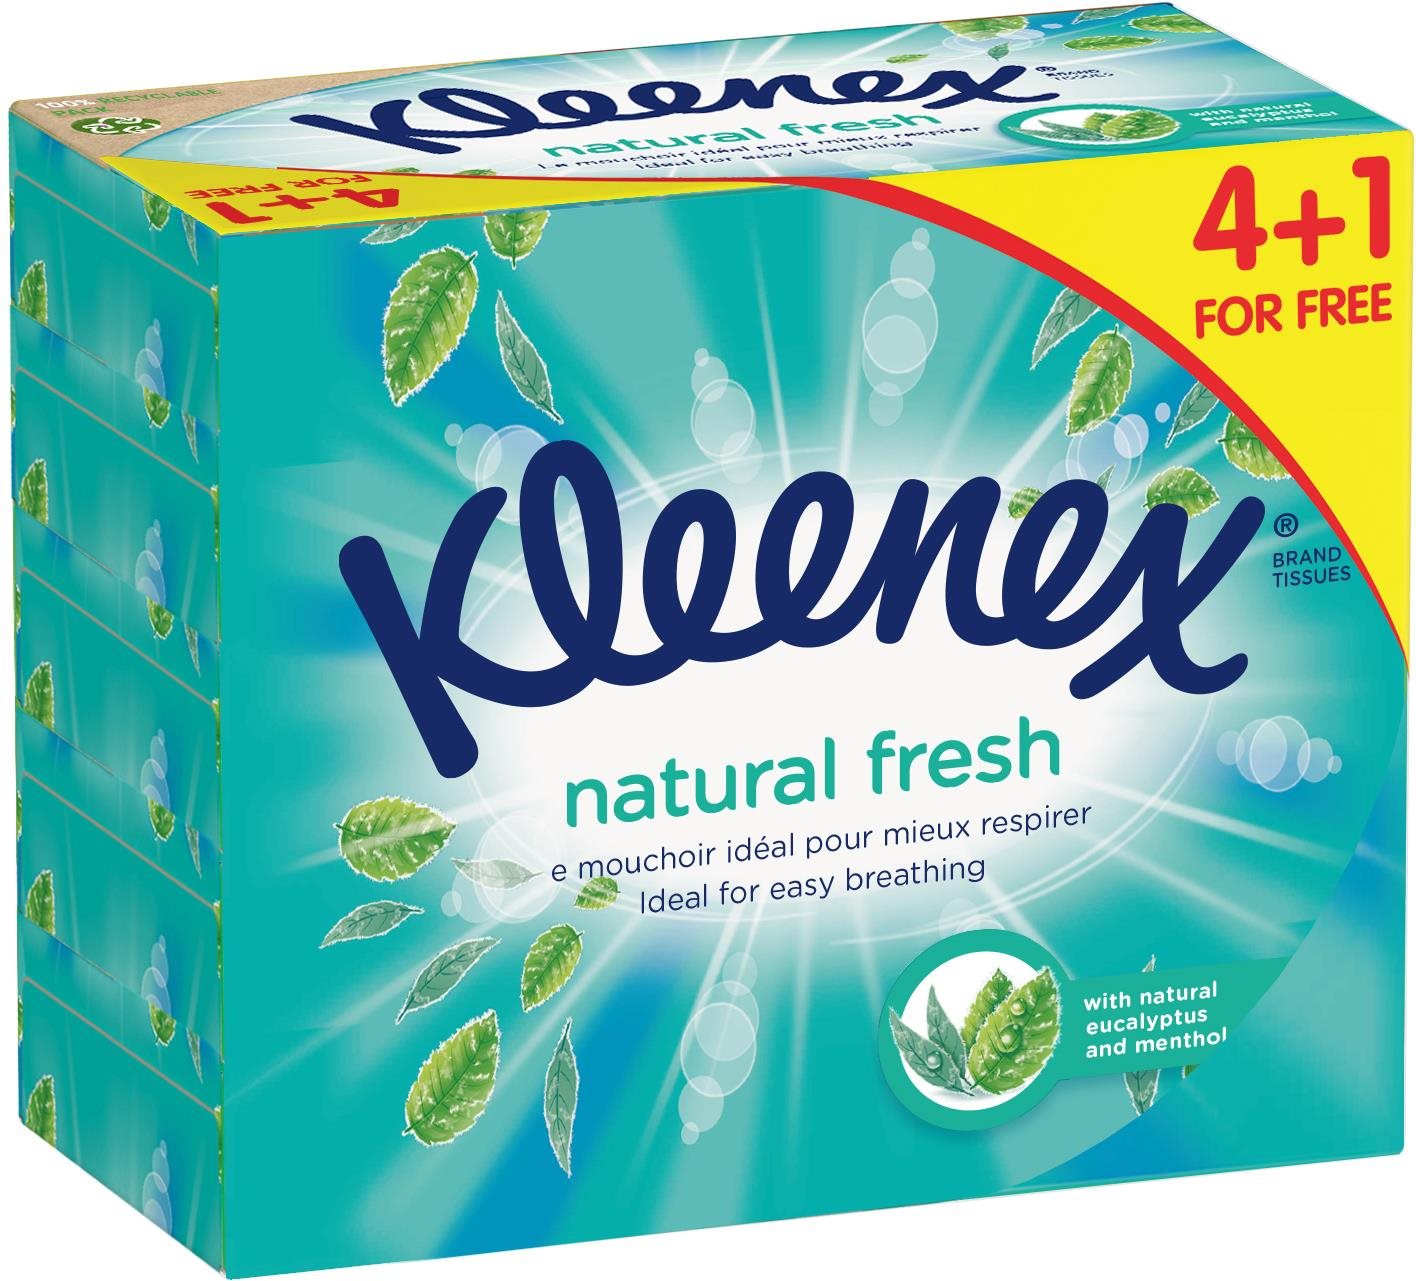 Papírzsebkendő KLEENEX Natural Fresh Box 5× 64 db (320 db)